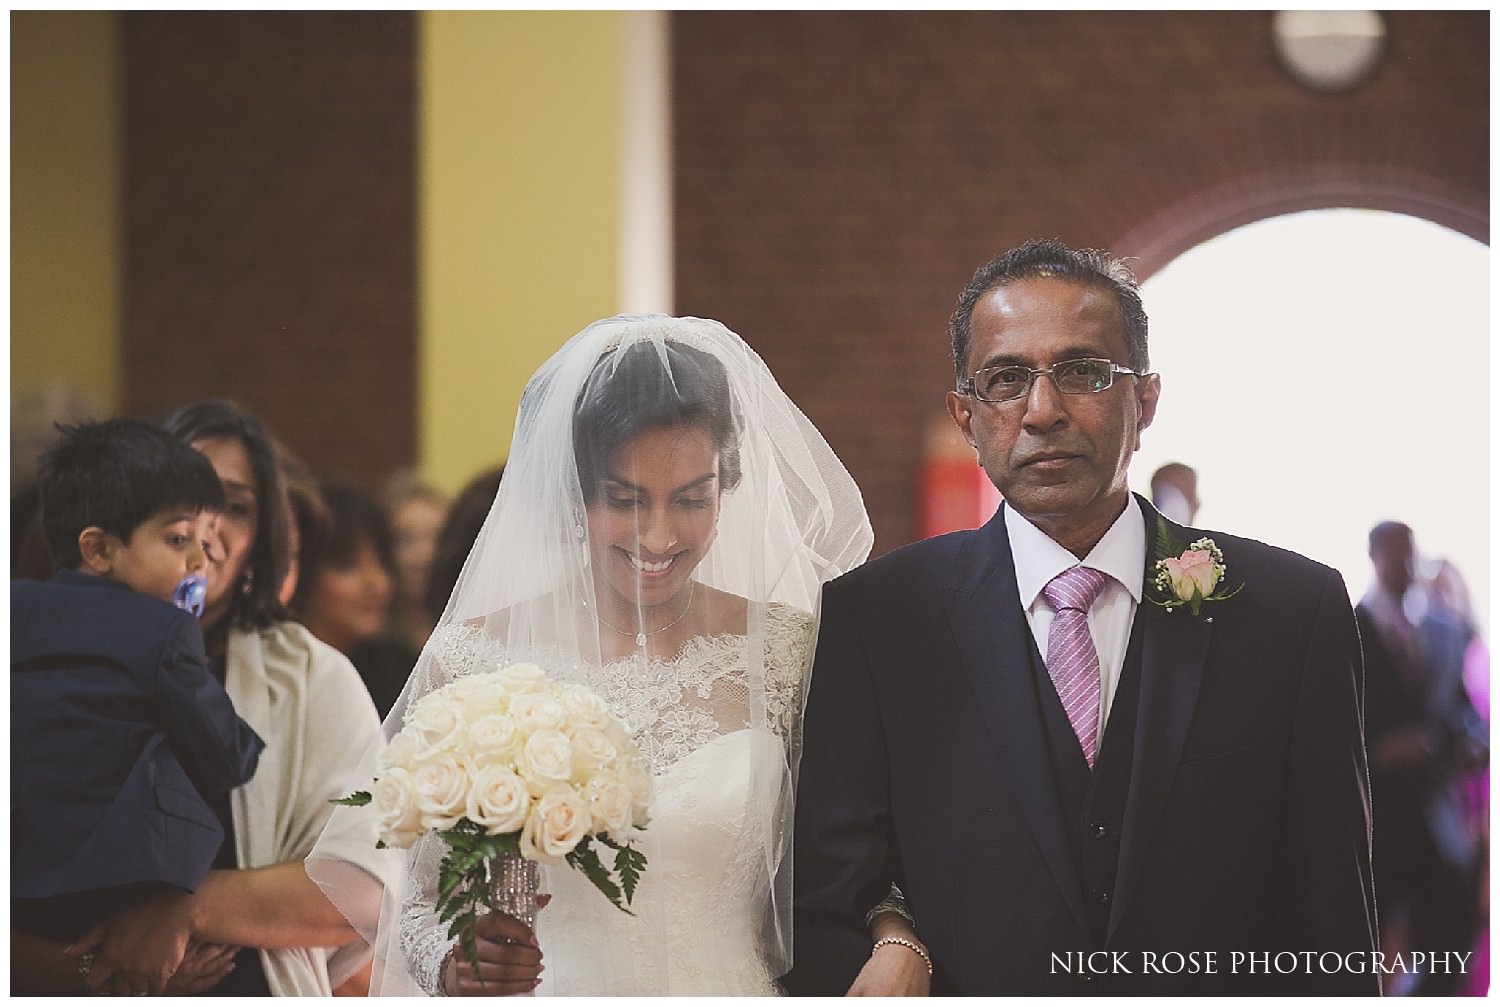 Catholic wedding Photography in North London